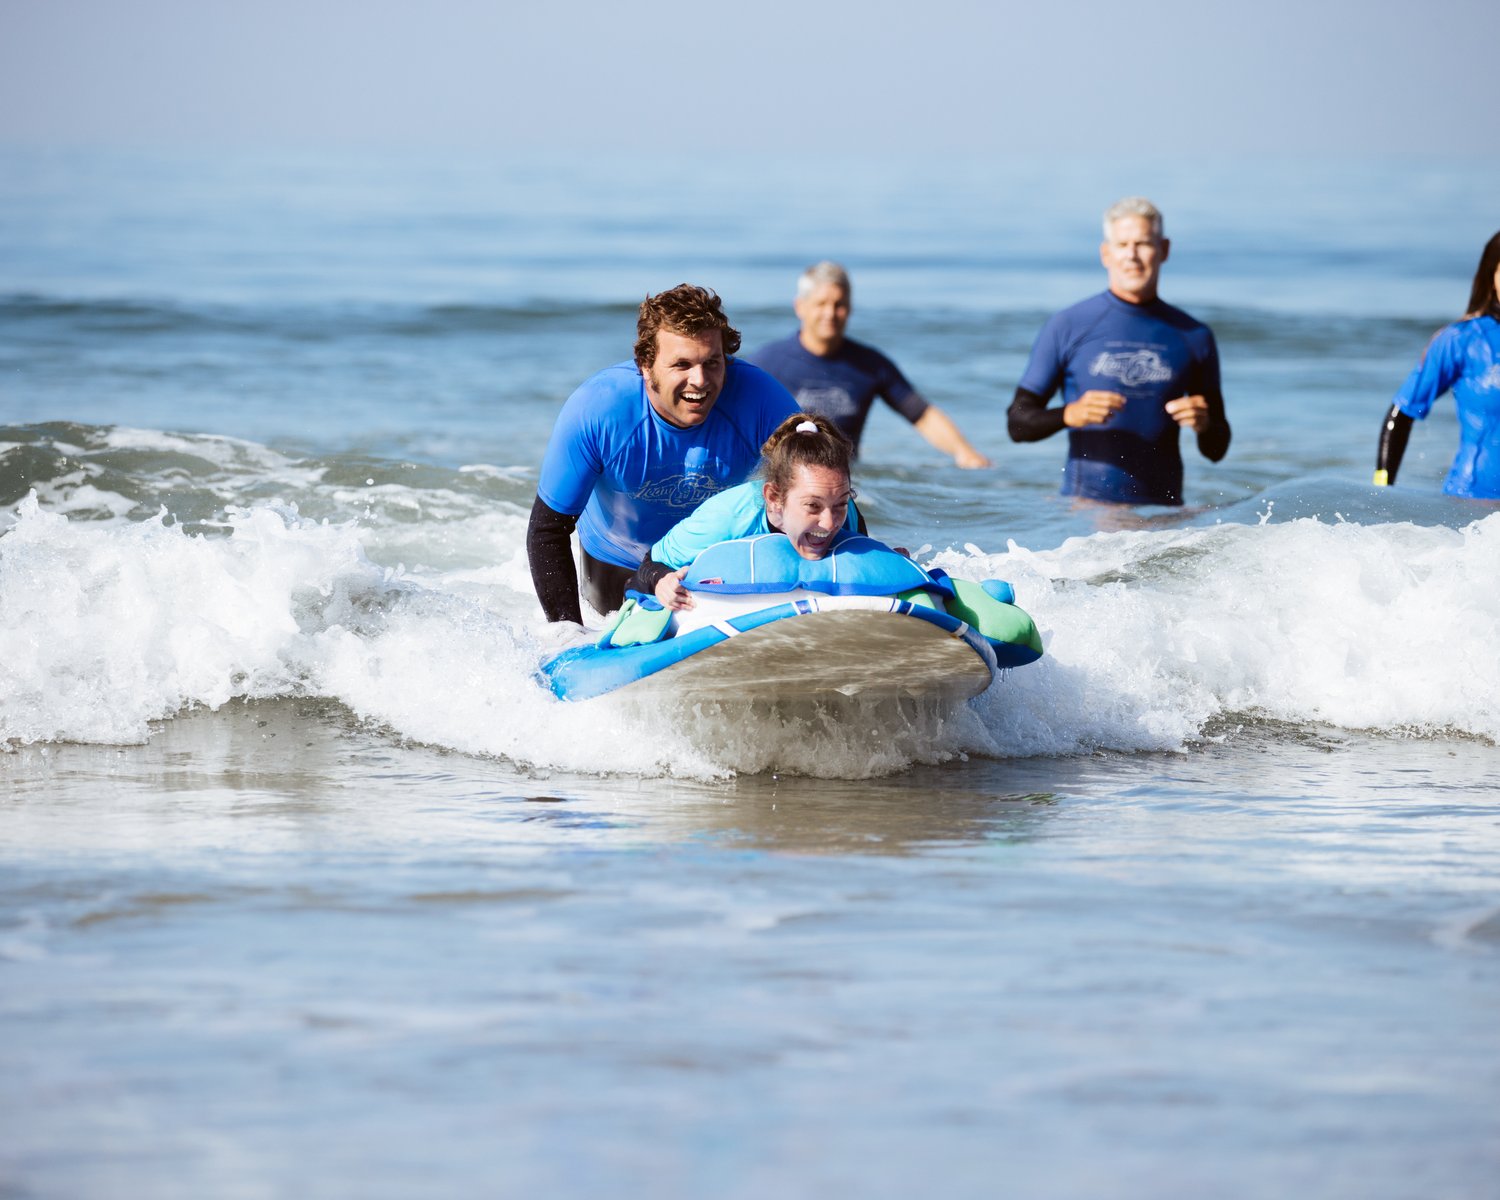 Team Quinn Summer Kick Off & Custom Rusty Auction - Adaptive Surf Event